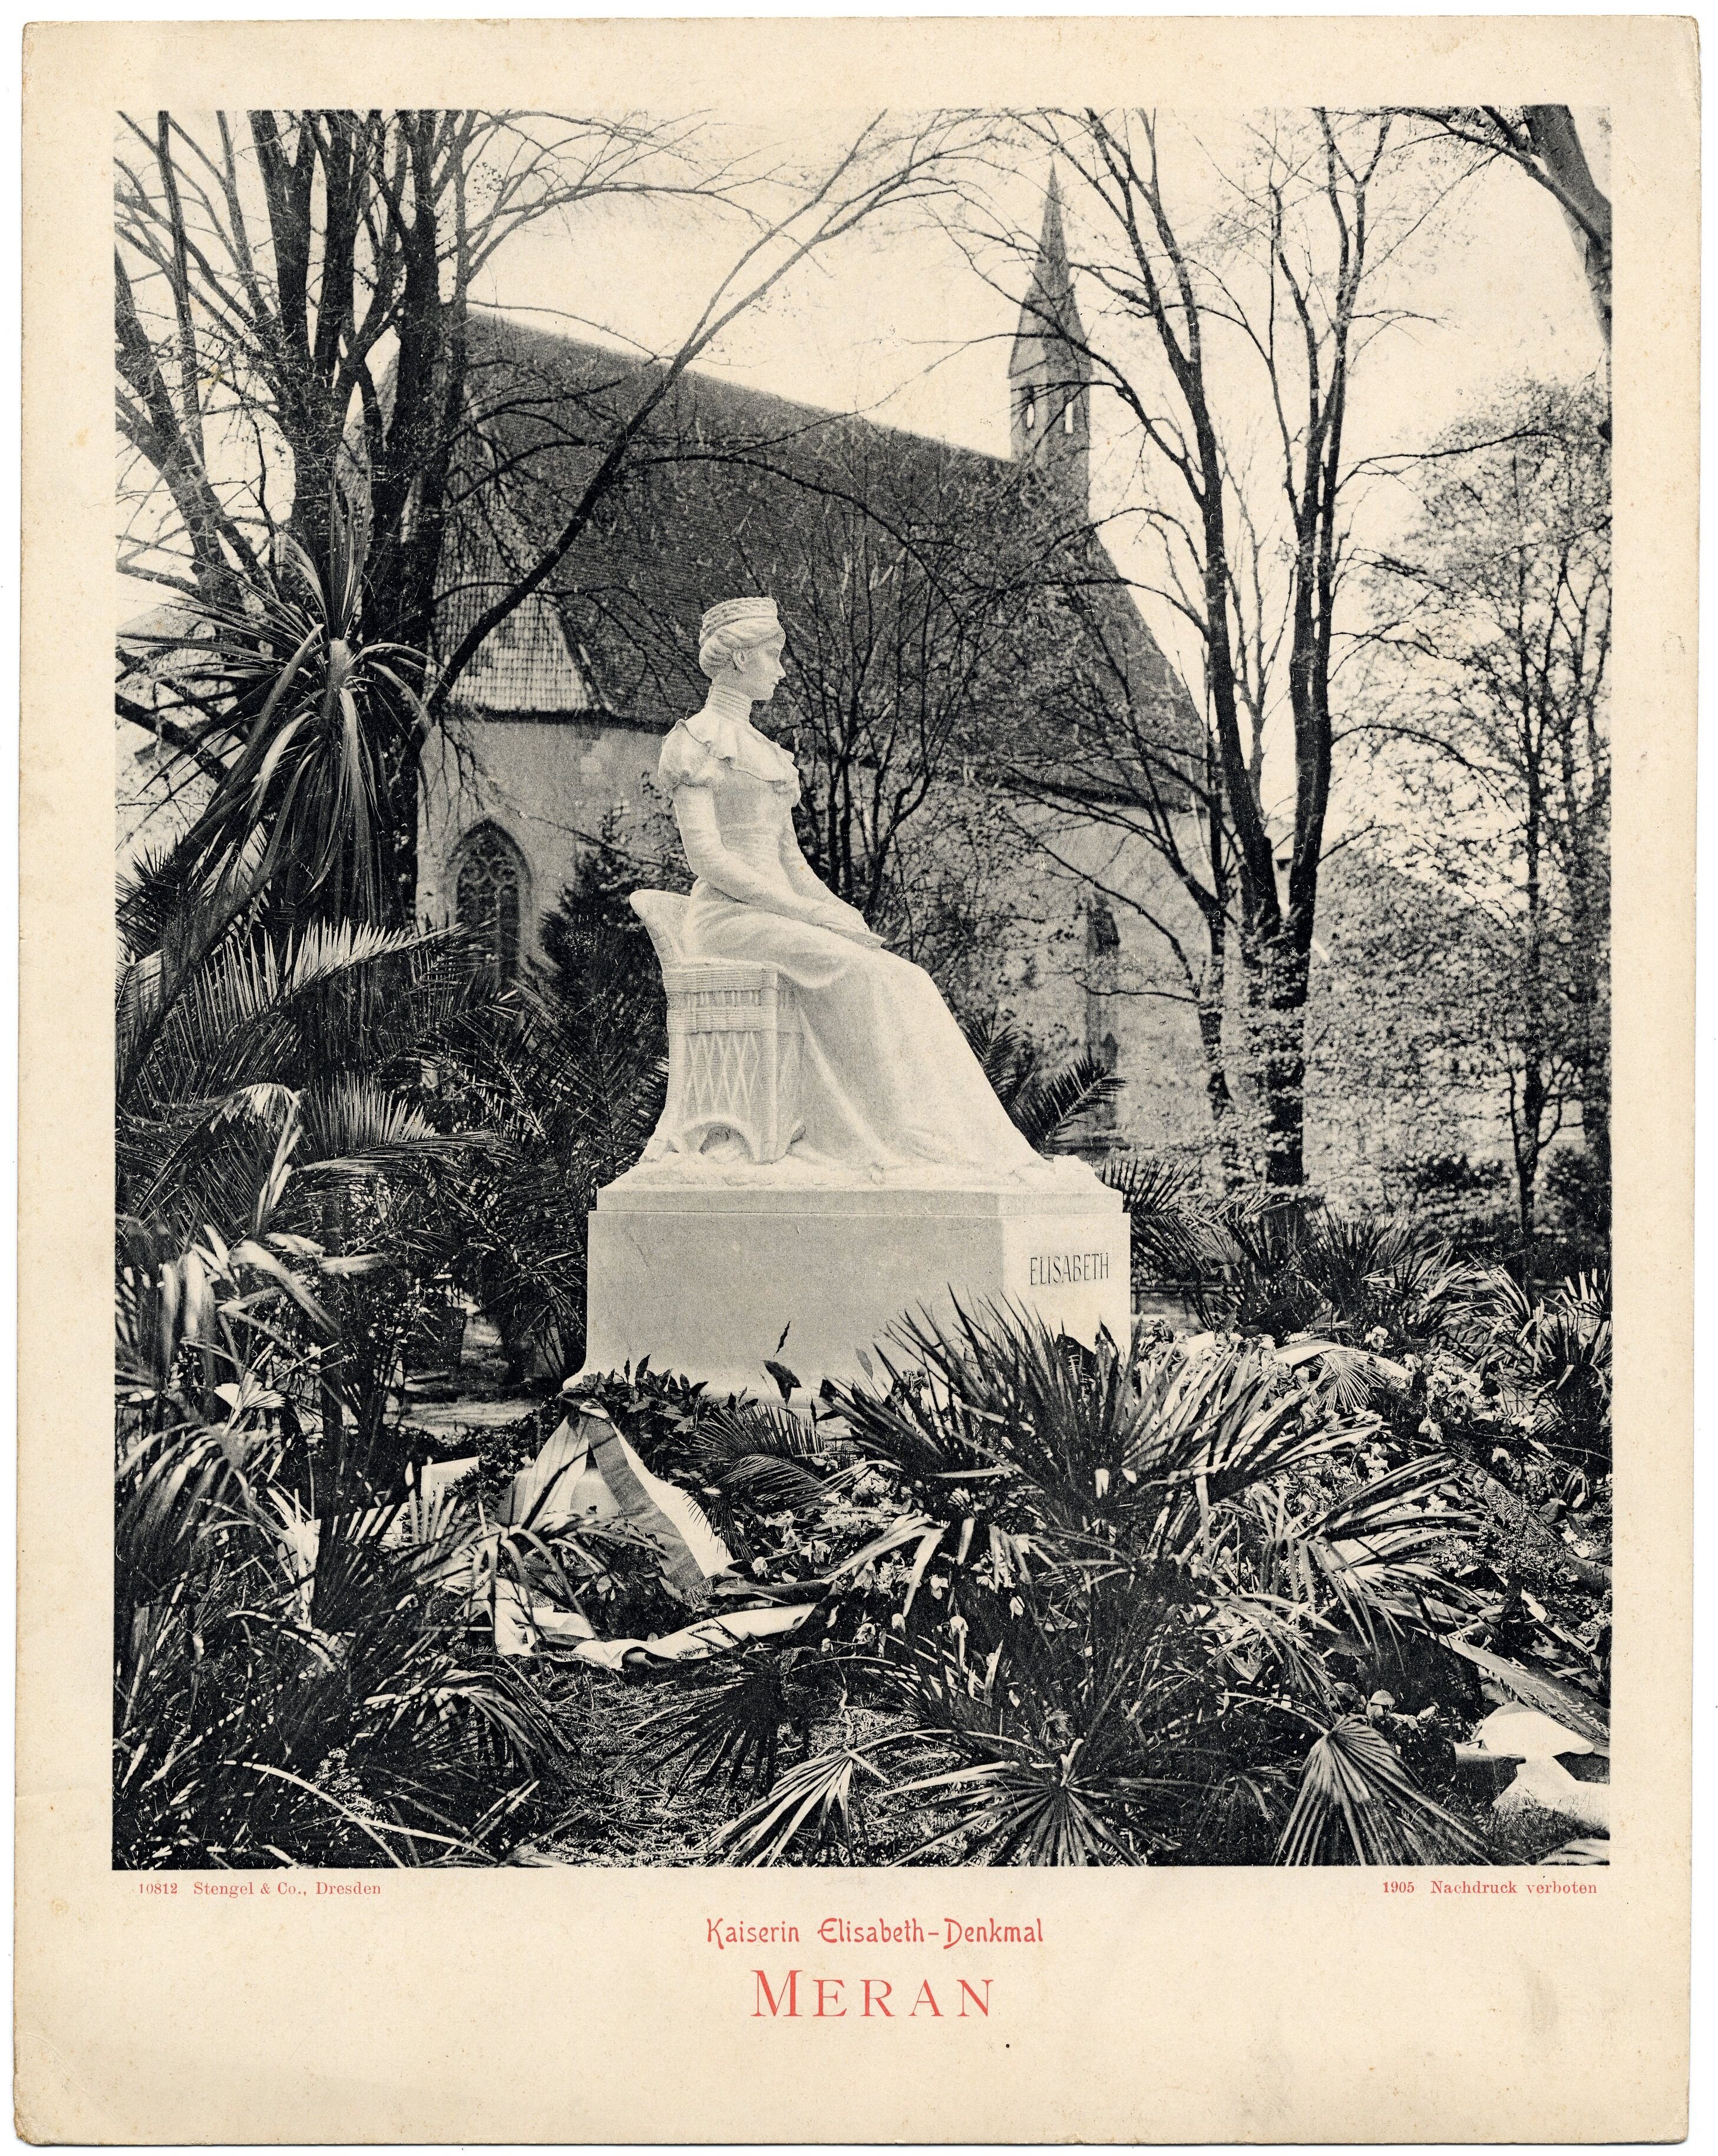 Historische Fotografie: Kaiserin Elisabeth-Denkmal in Meran